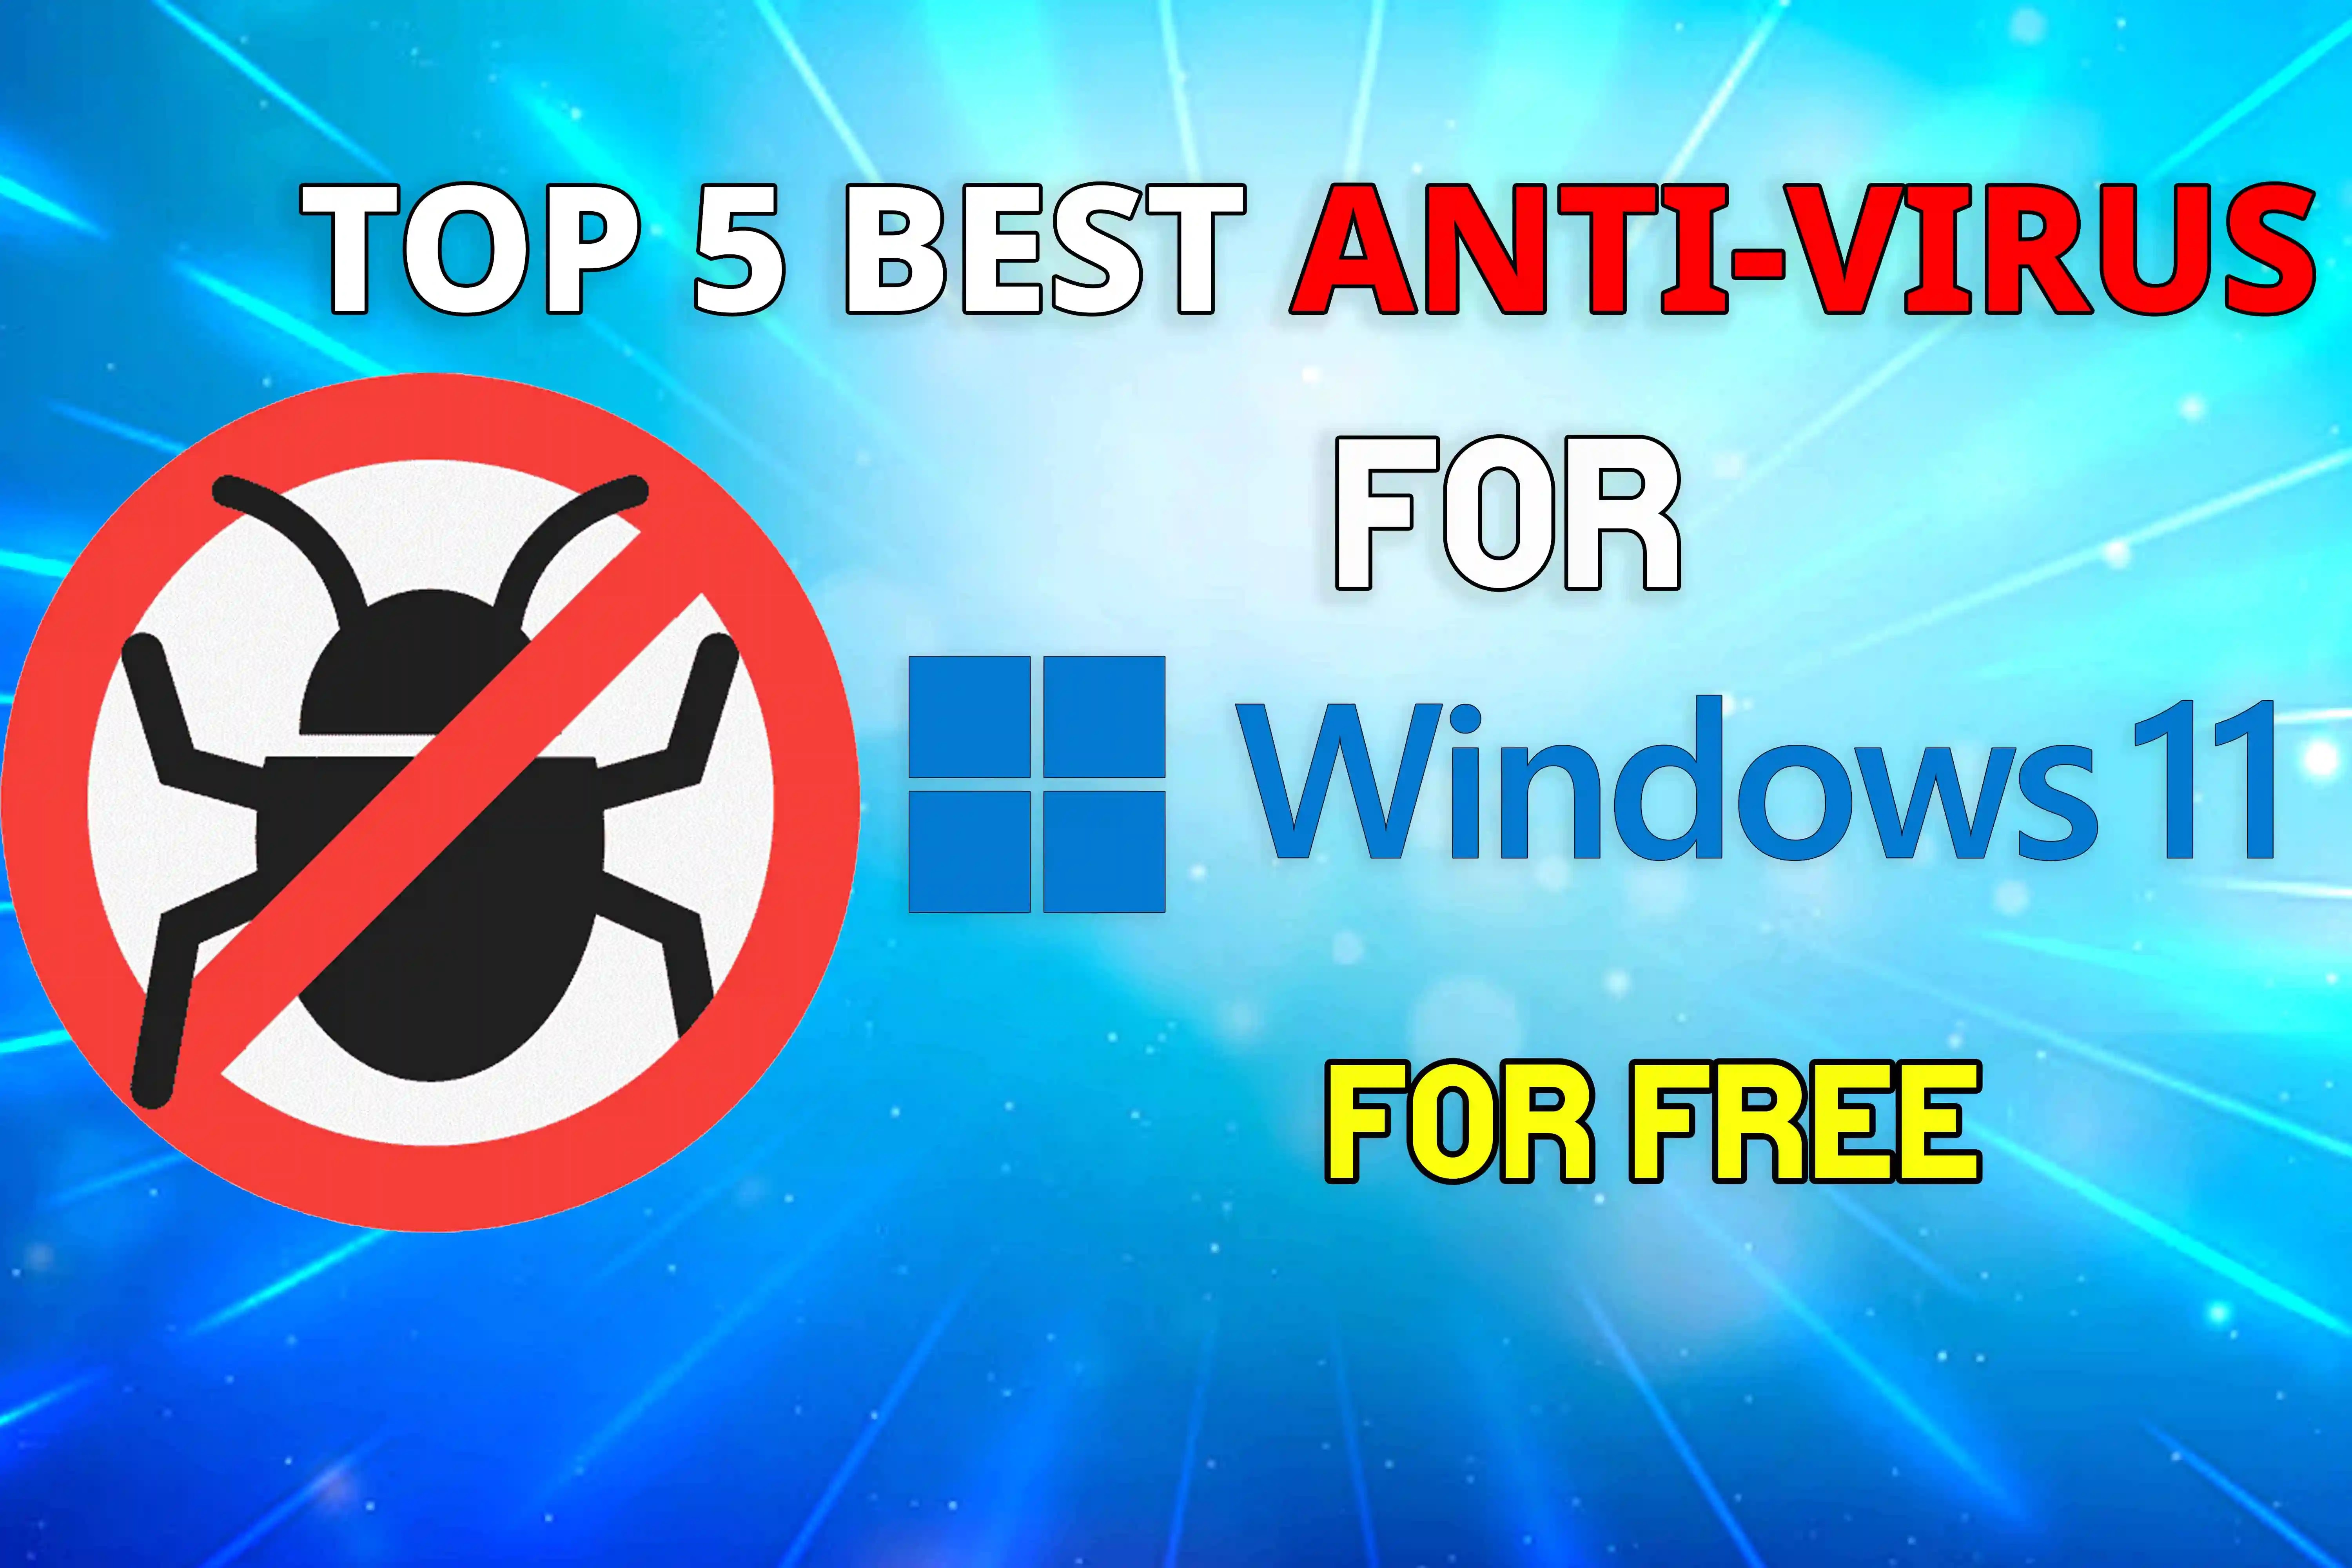 Top 5 best antivirus for windows 10 for free